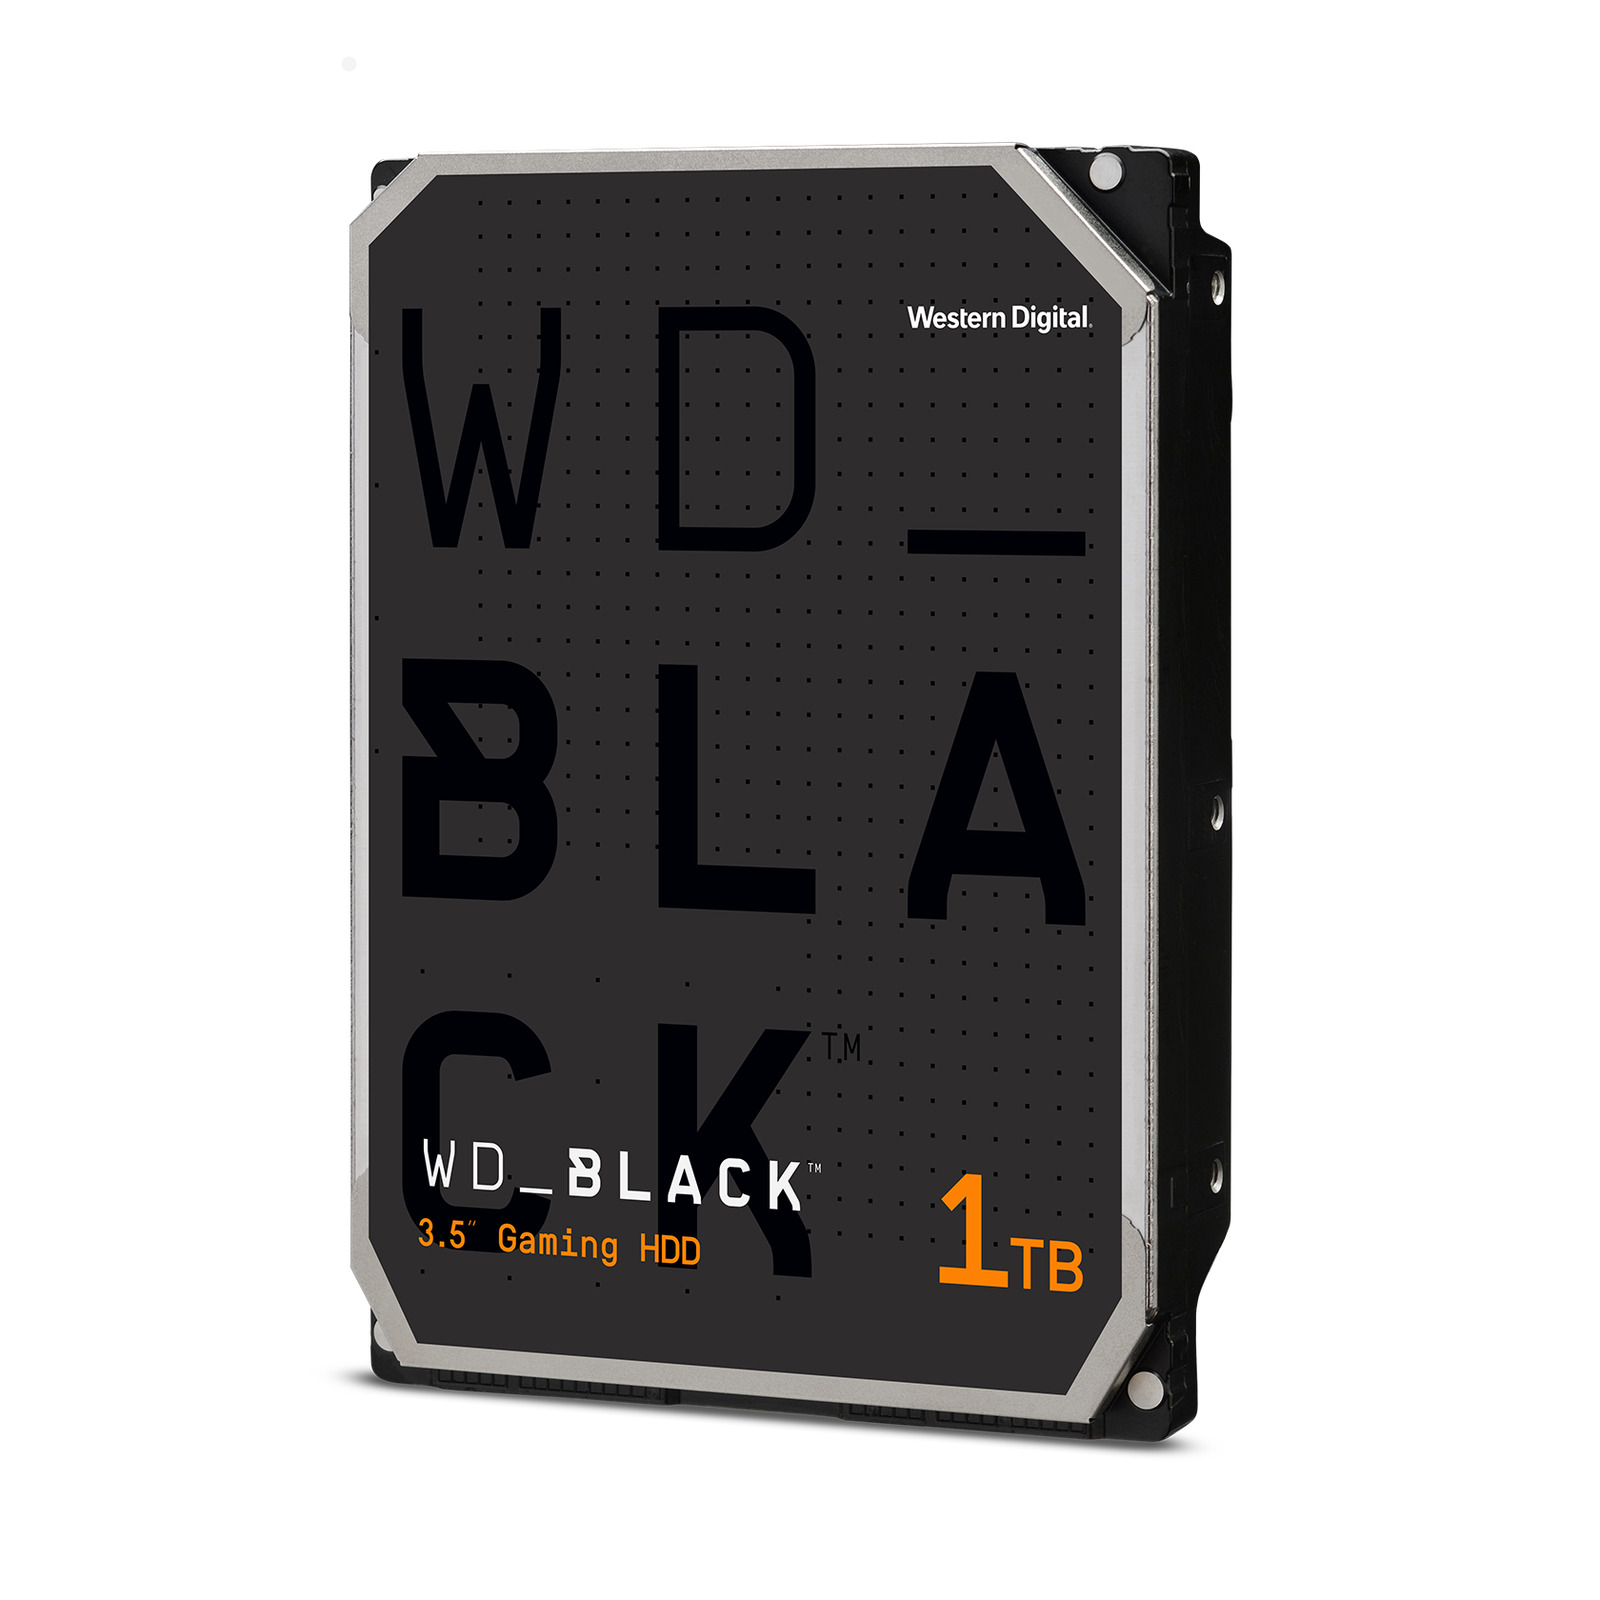 WD_BLACK 1TB 3.5'' Internal Gaming Hard Drive, 64MB Cache - WD1003FZEX